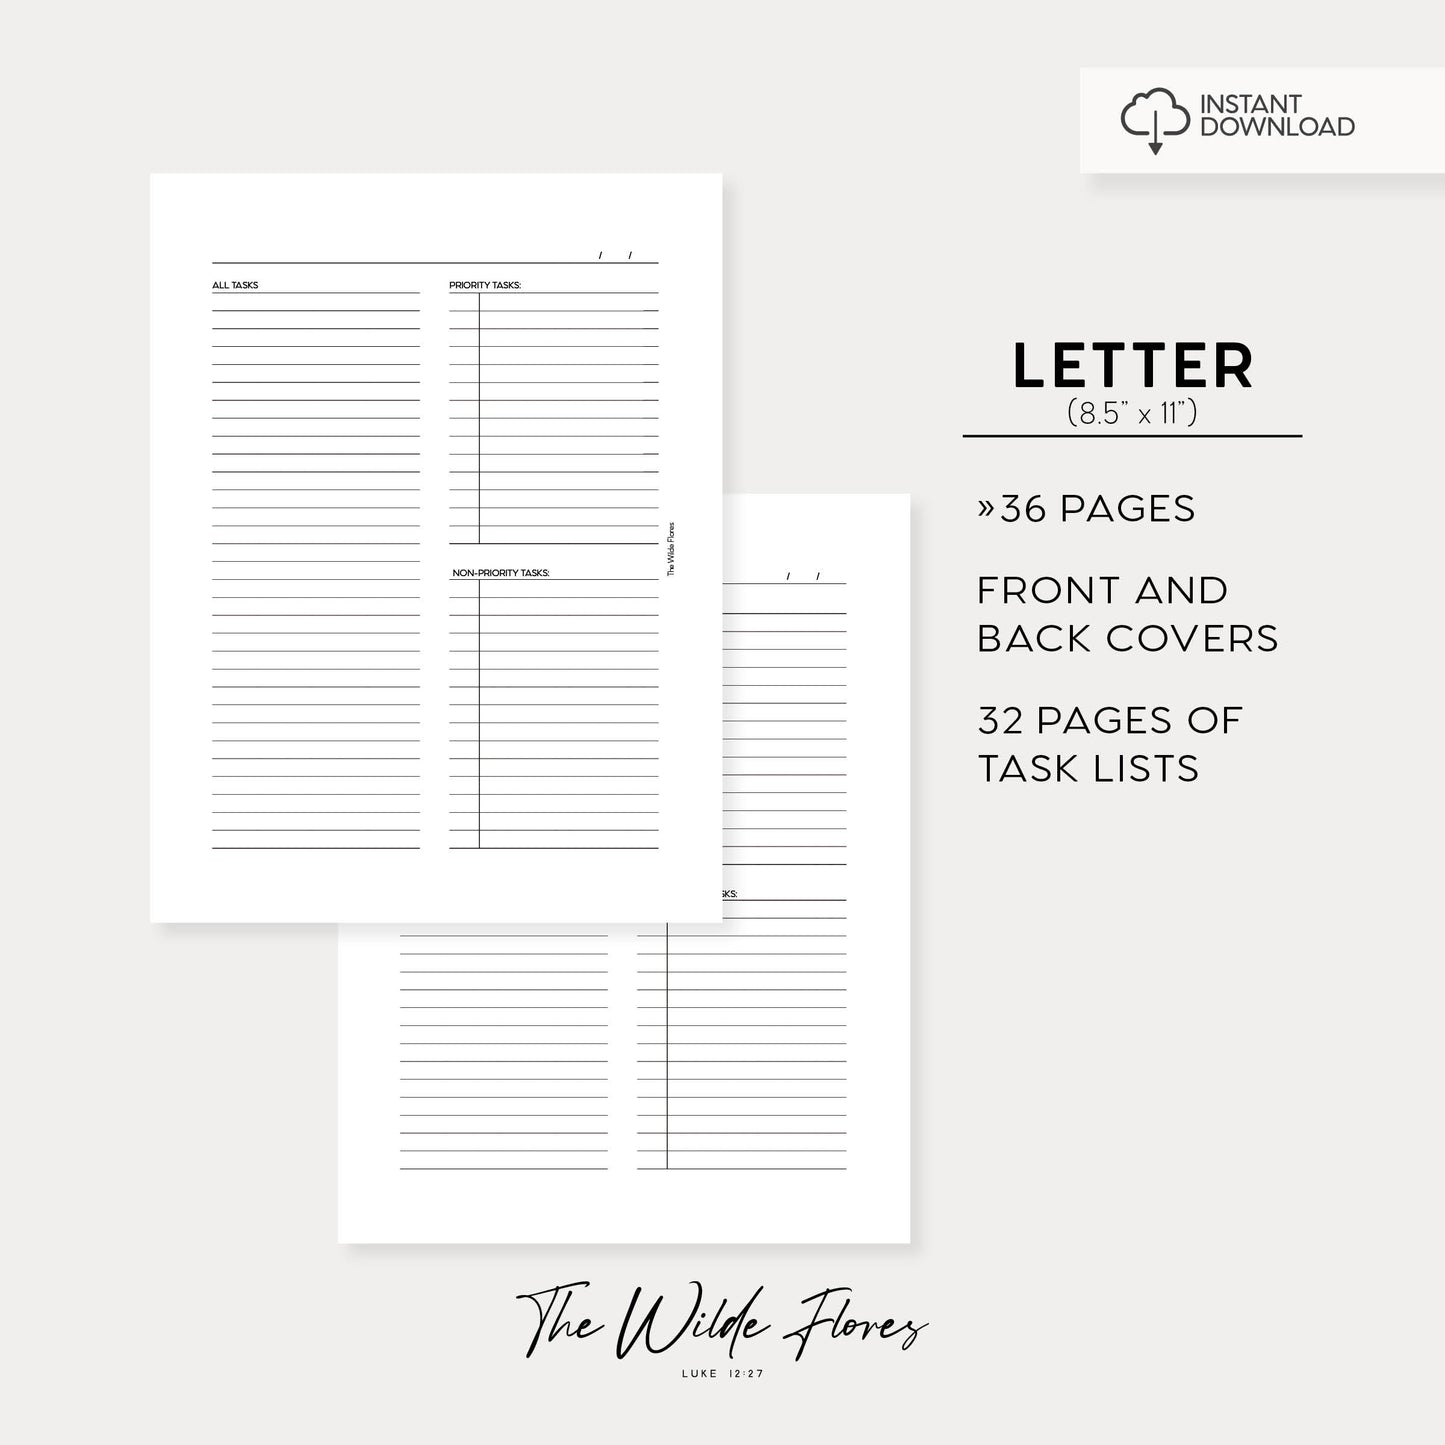 Task Lists: Letter Size Printable